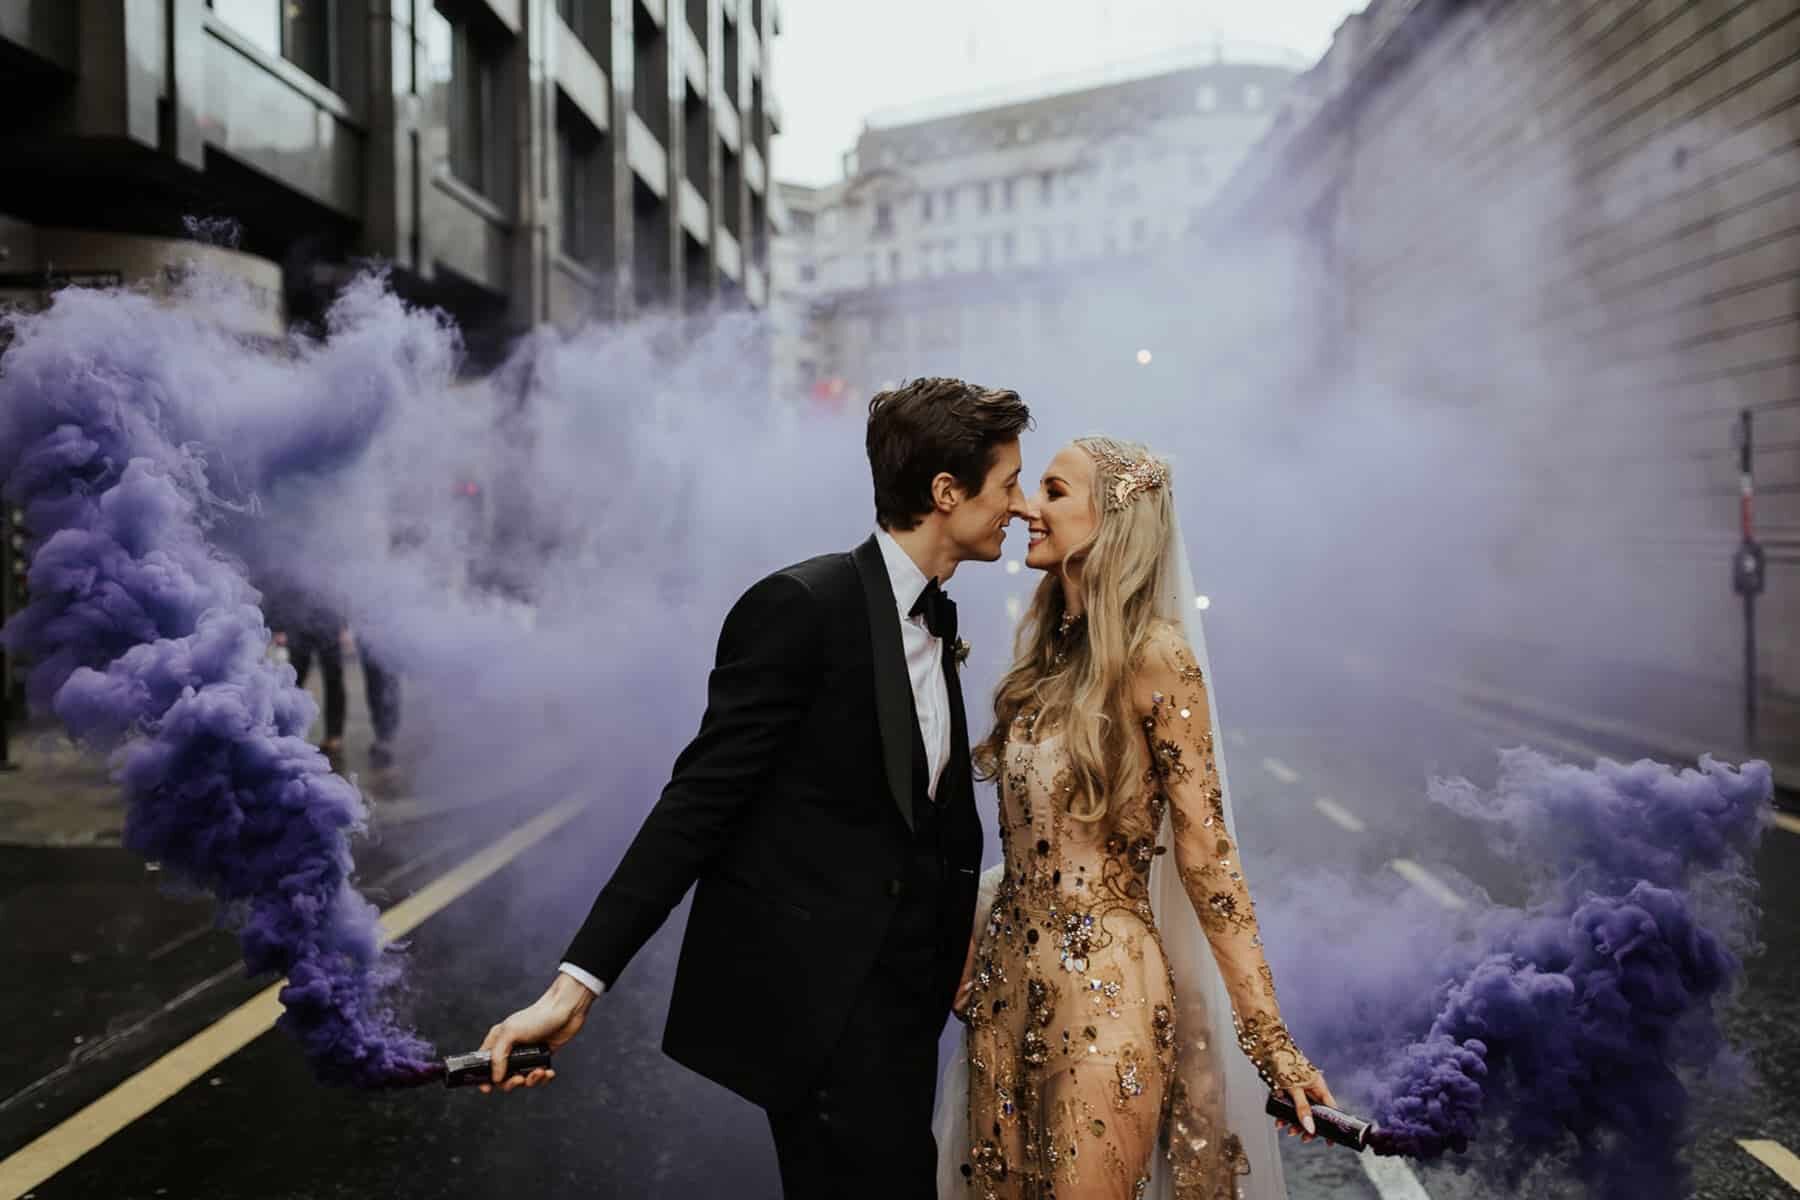 urban wedding with colour smoke bomb by Damien Milan